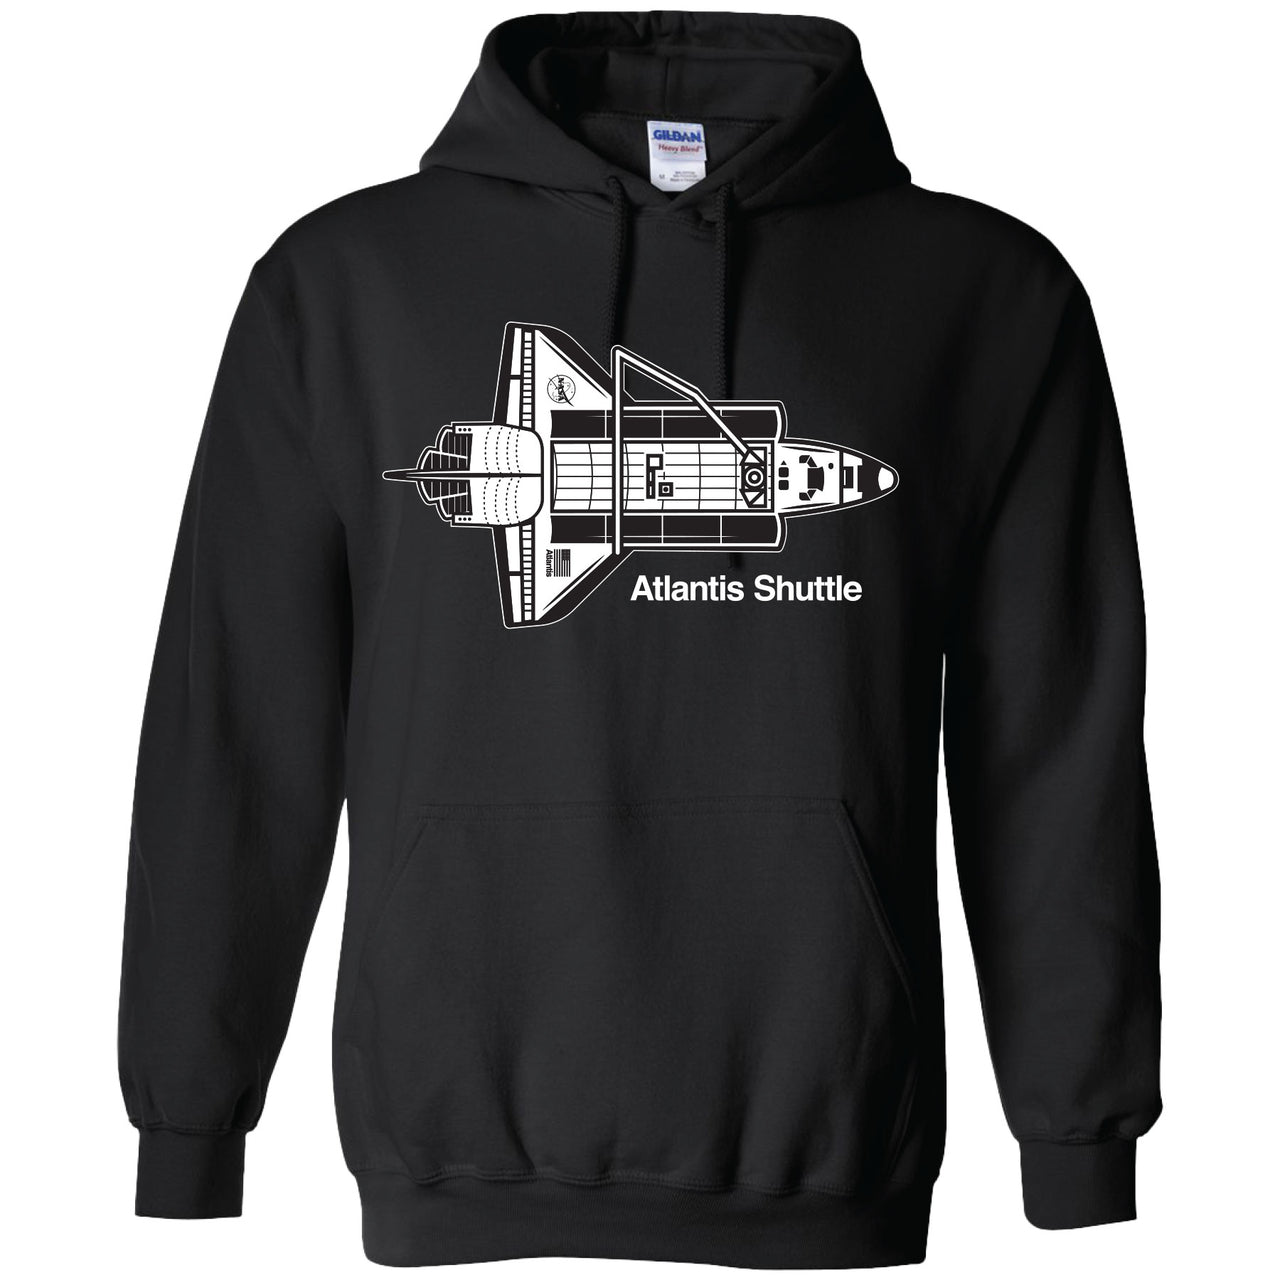 NASA - Atlantis Shuttle 2-sided Hooded Sweatshirt